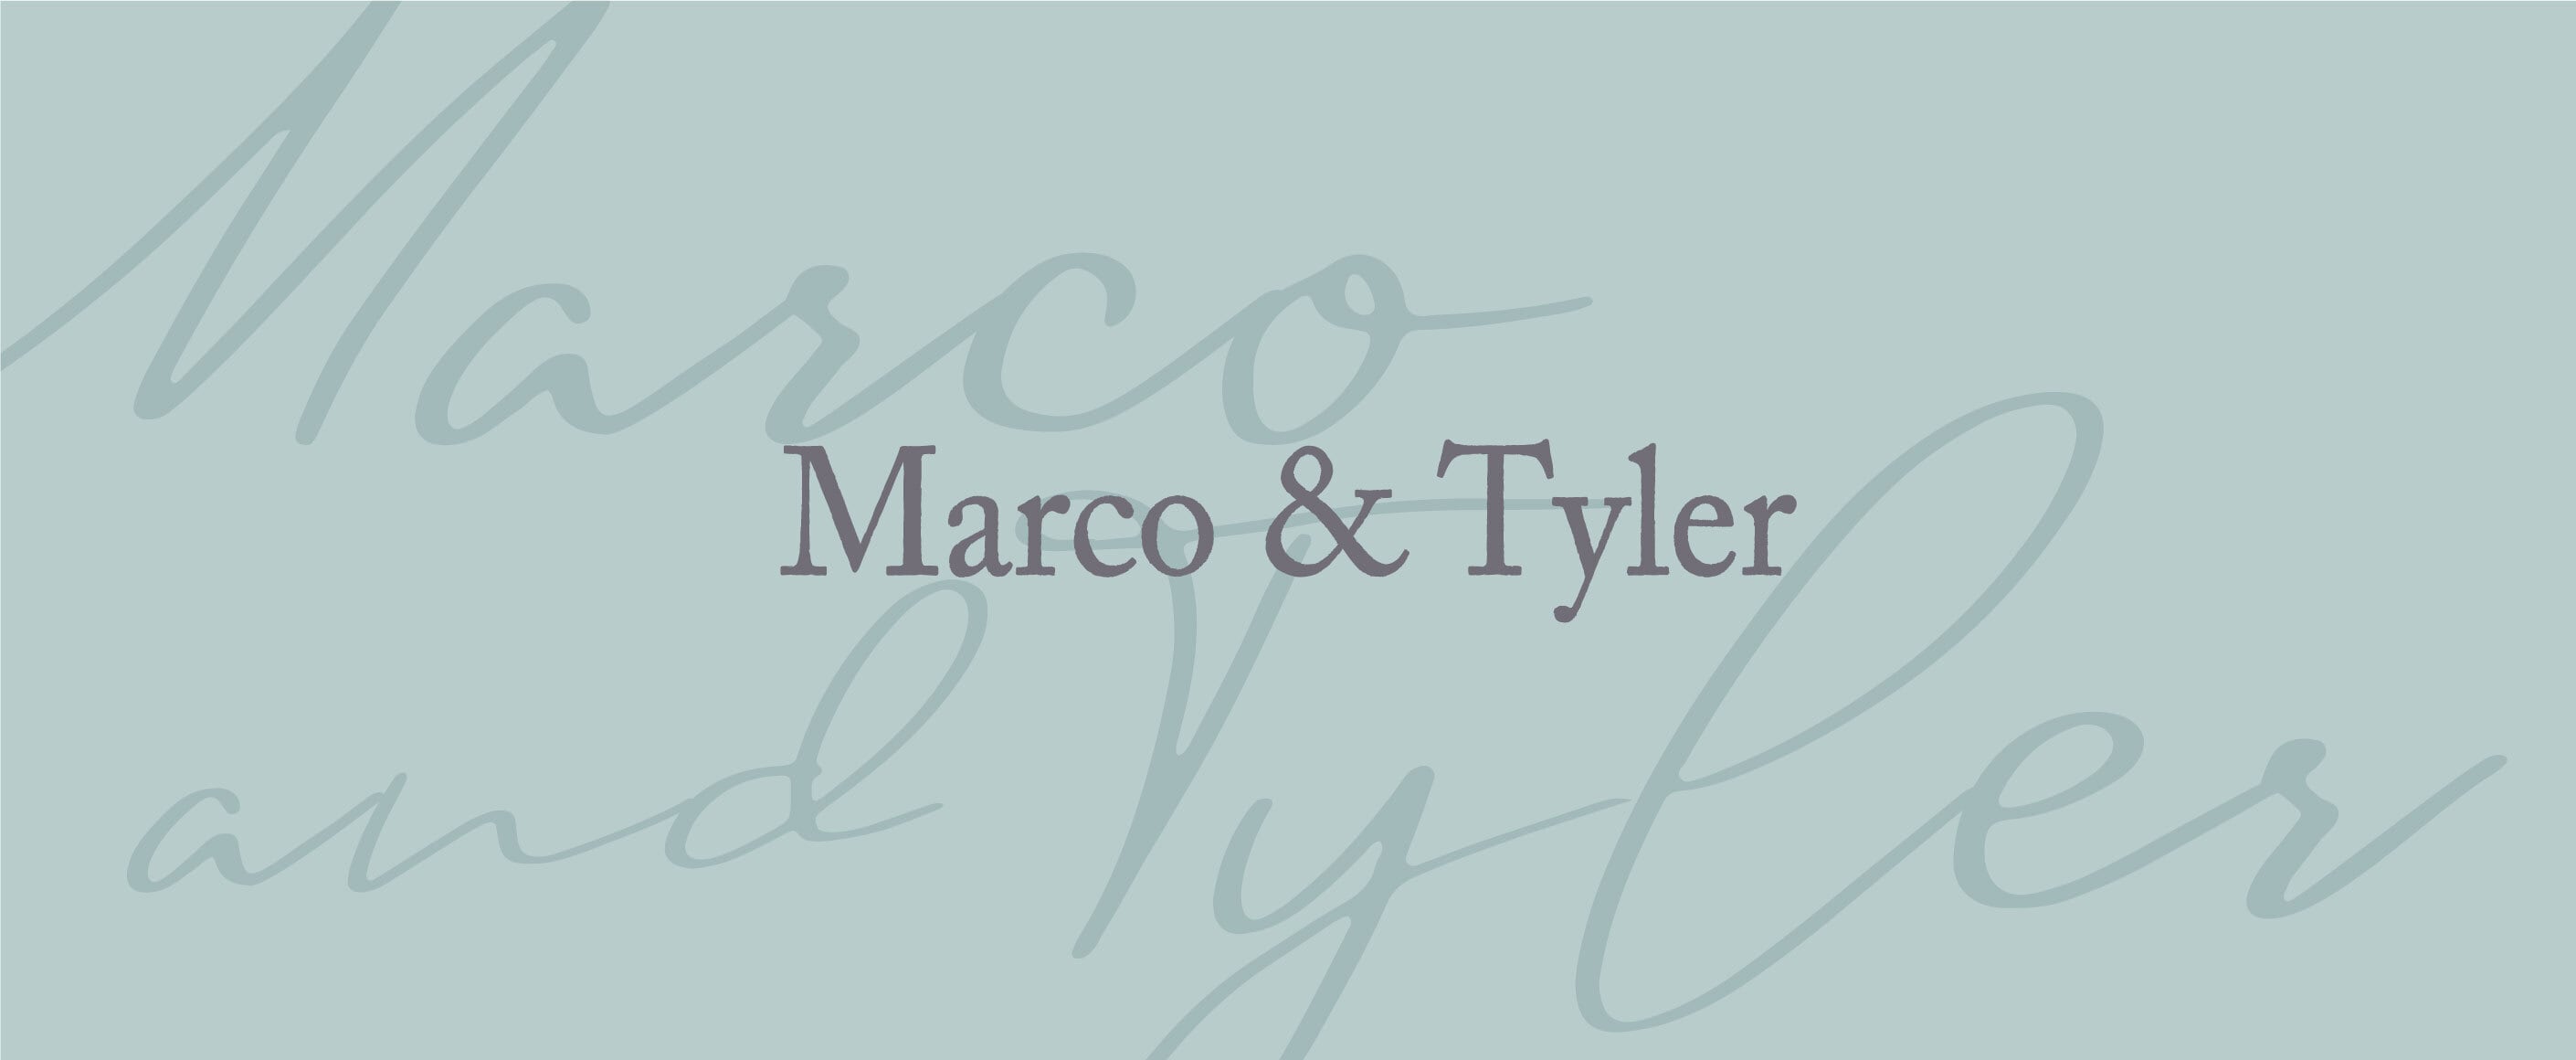 Marco & Tyler マルコタイラー